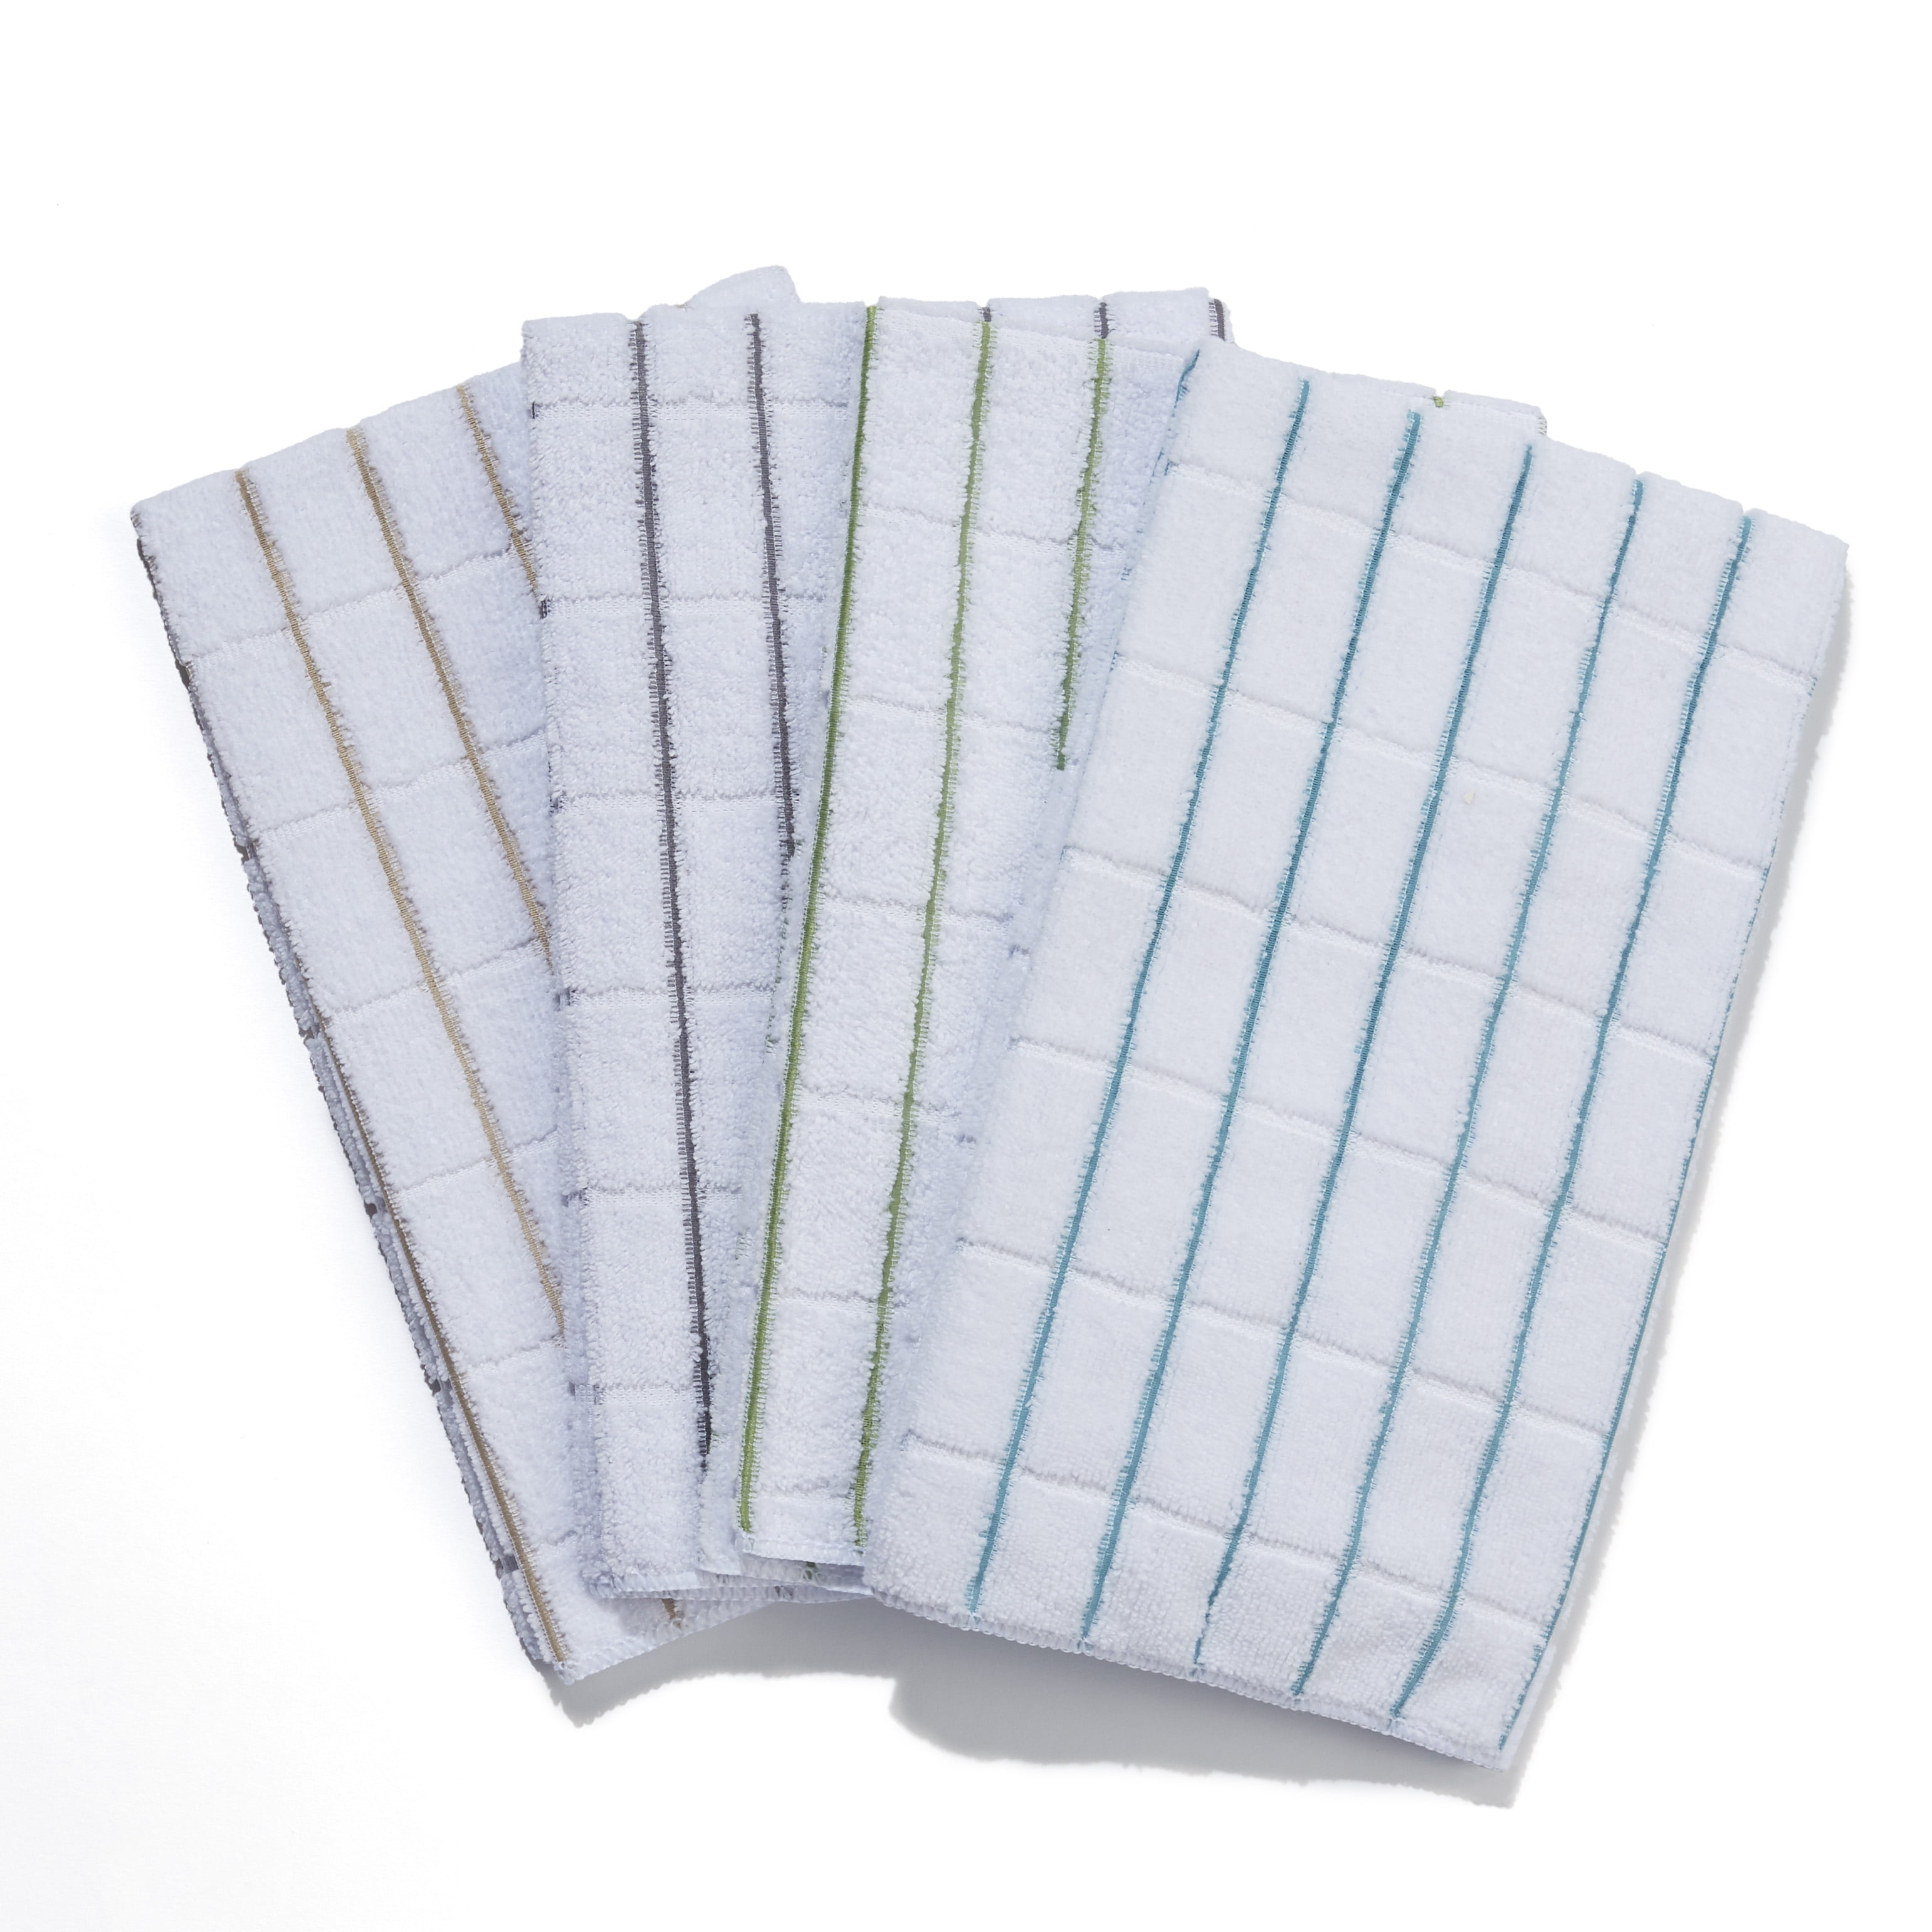 Mainstays, 4 Pack, Microfiber Stripe Kitchen Towels, White 